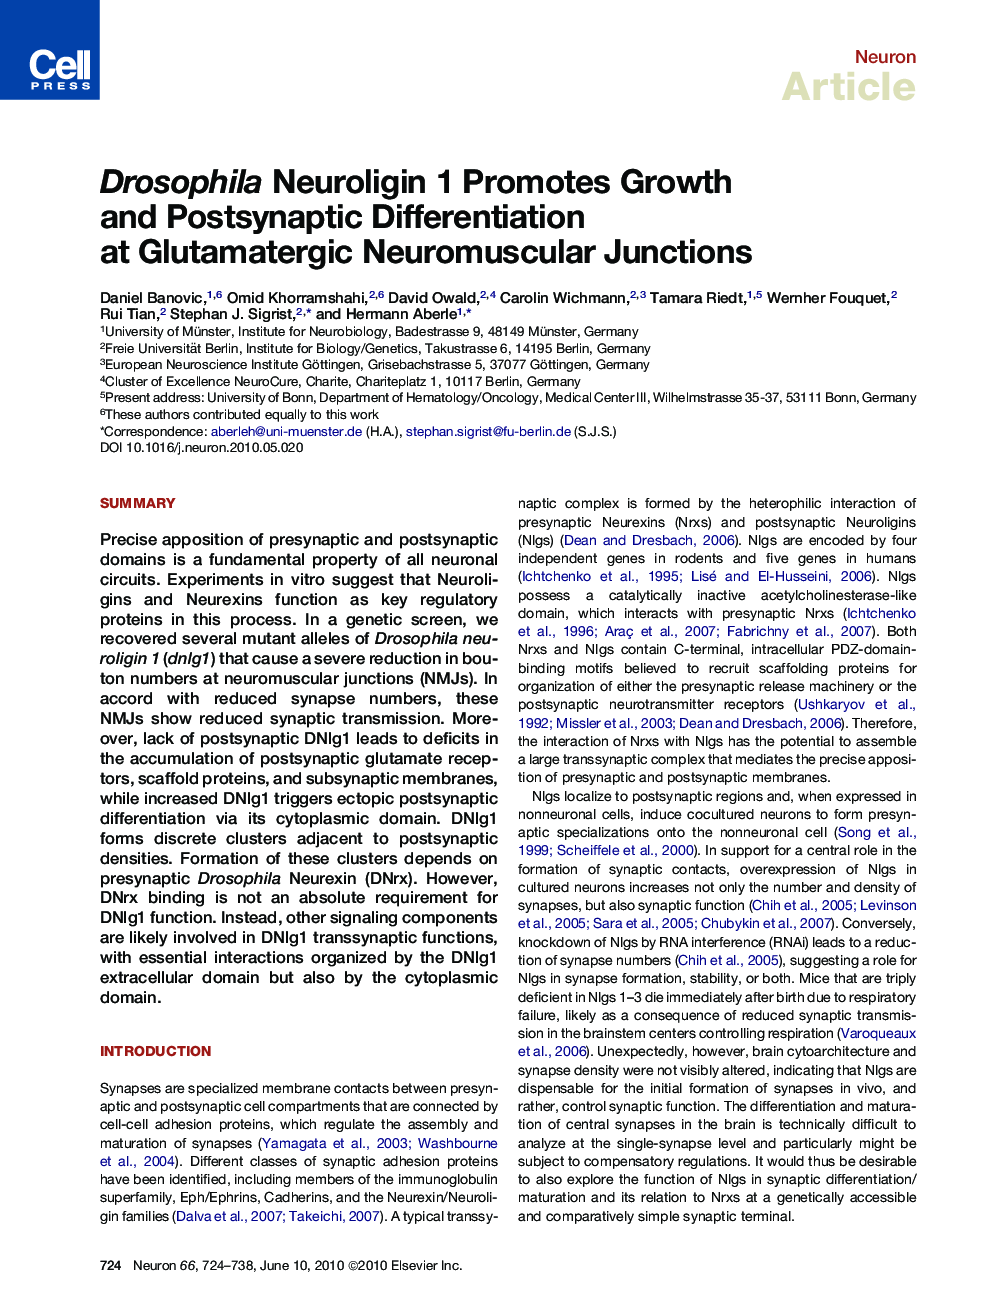 Drosophila Neuroligin 1 Promotes Growth and Postsynaptic Differentiation at Glutamatergic Neuromuscular Junctions